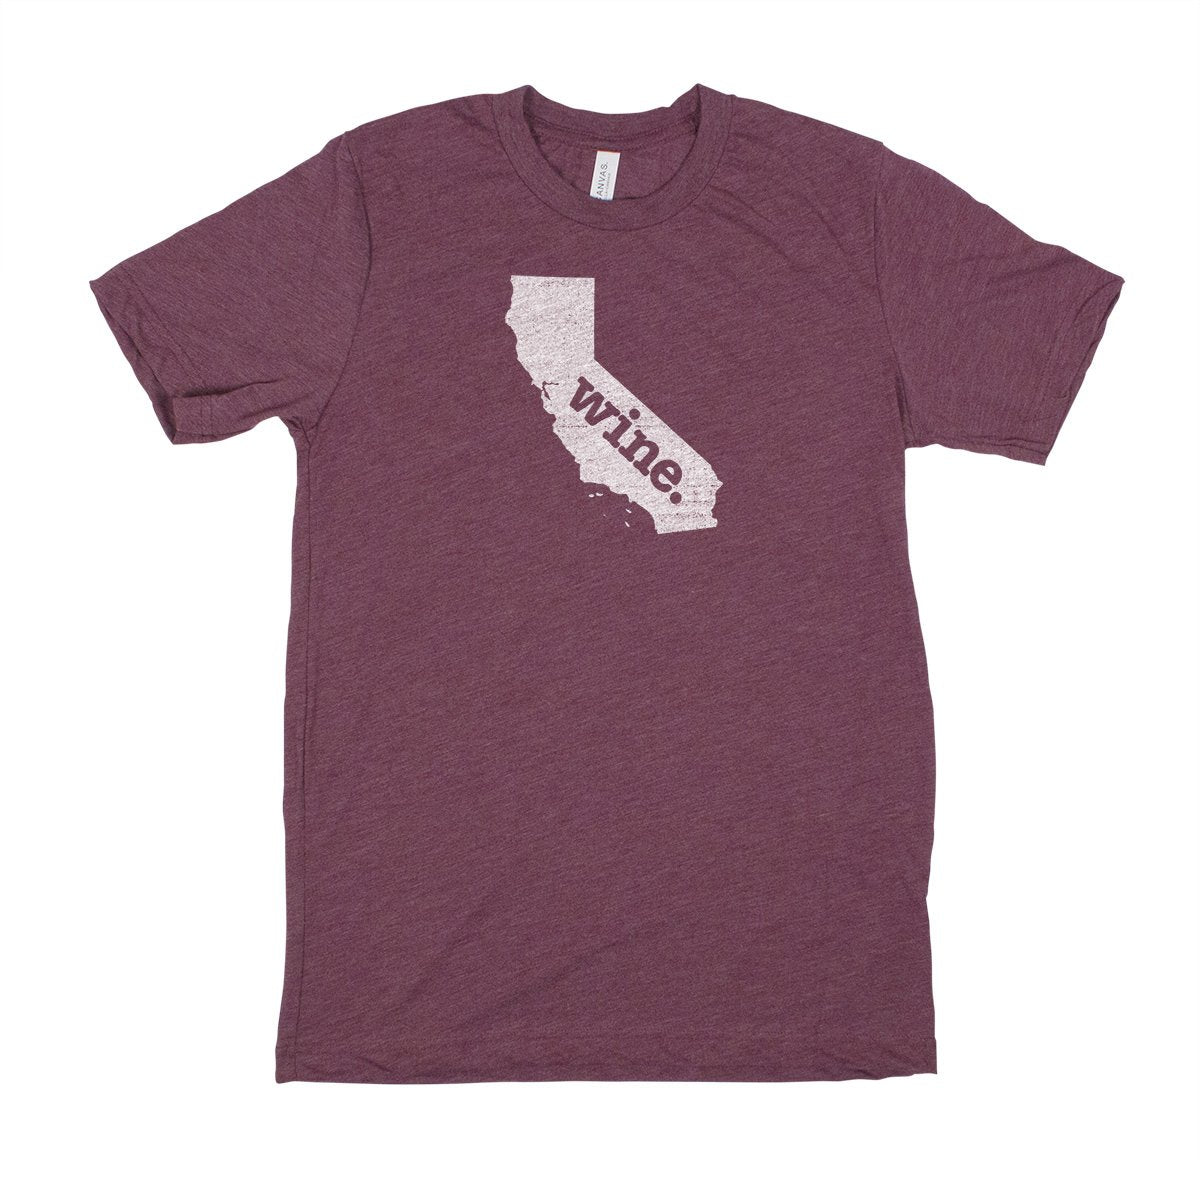 ski. Men's Unisex T-Shirt - Wisconsin